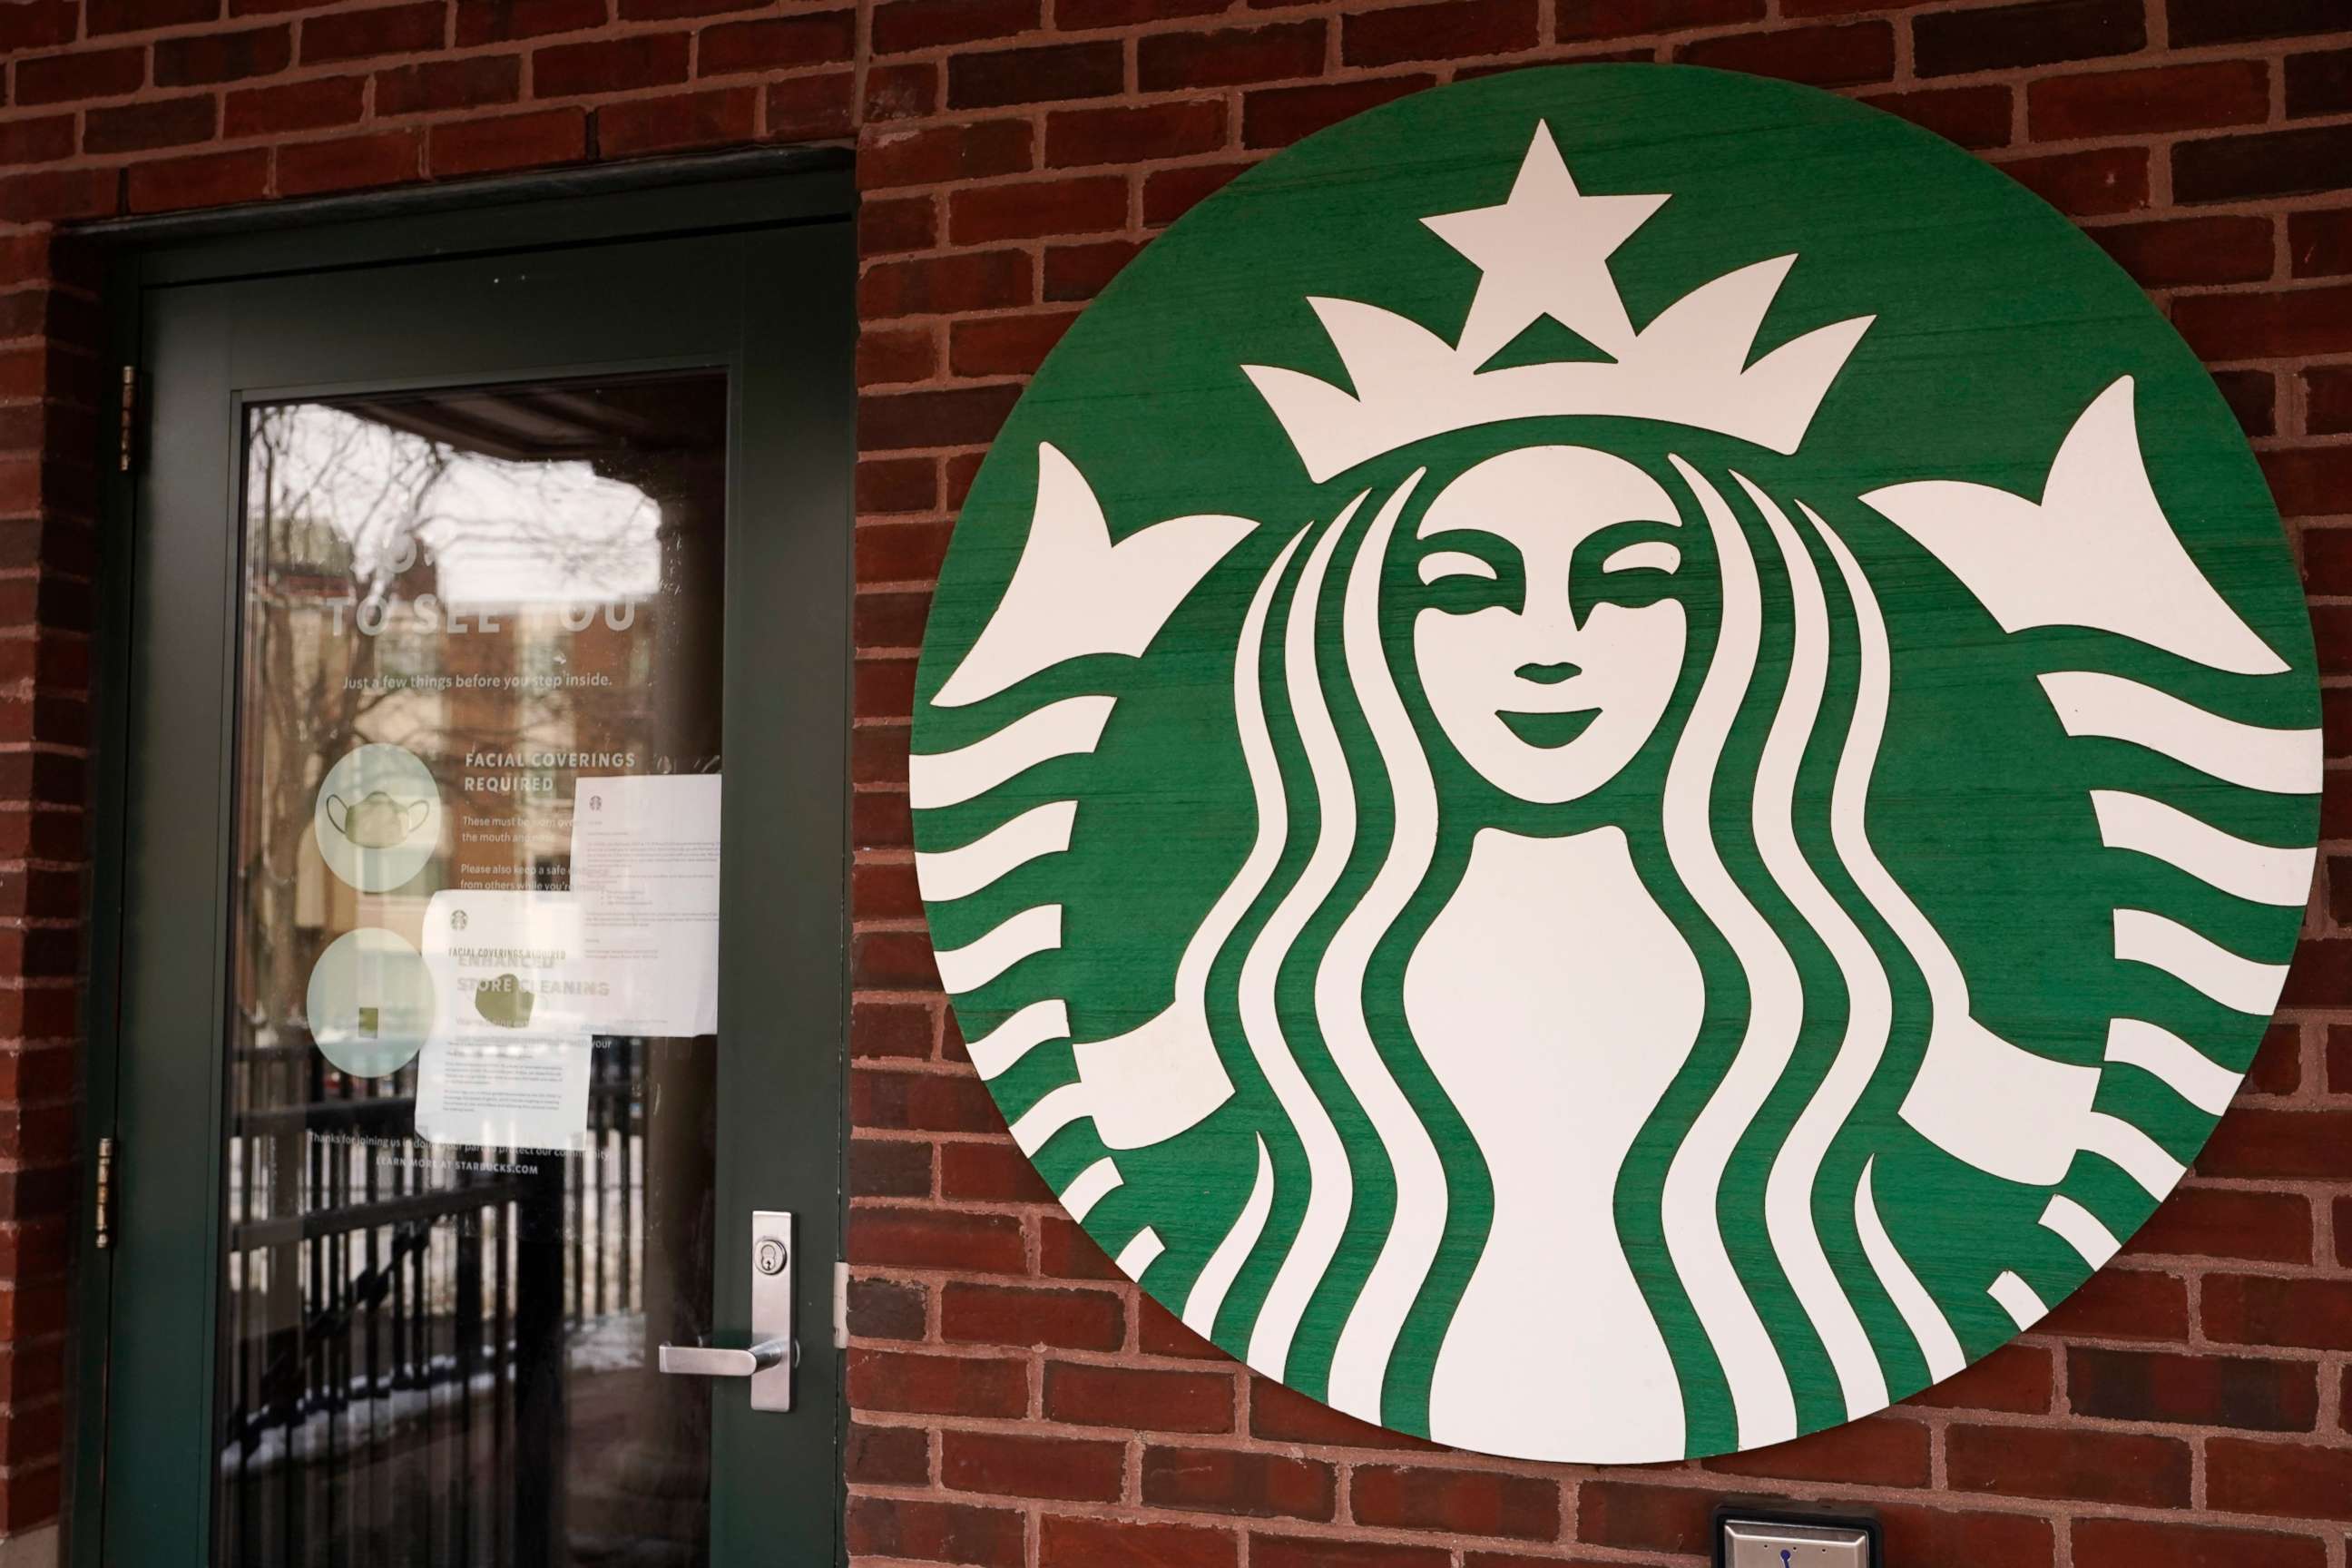 PHOTO: A Starbucks coffee company logo sign is seen at Palatine Metra train station in Palatine, Ill., Jan. 6, 2021.